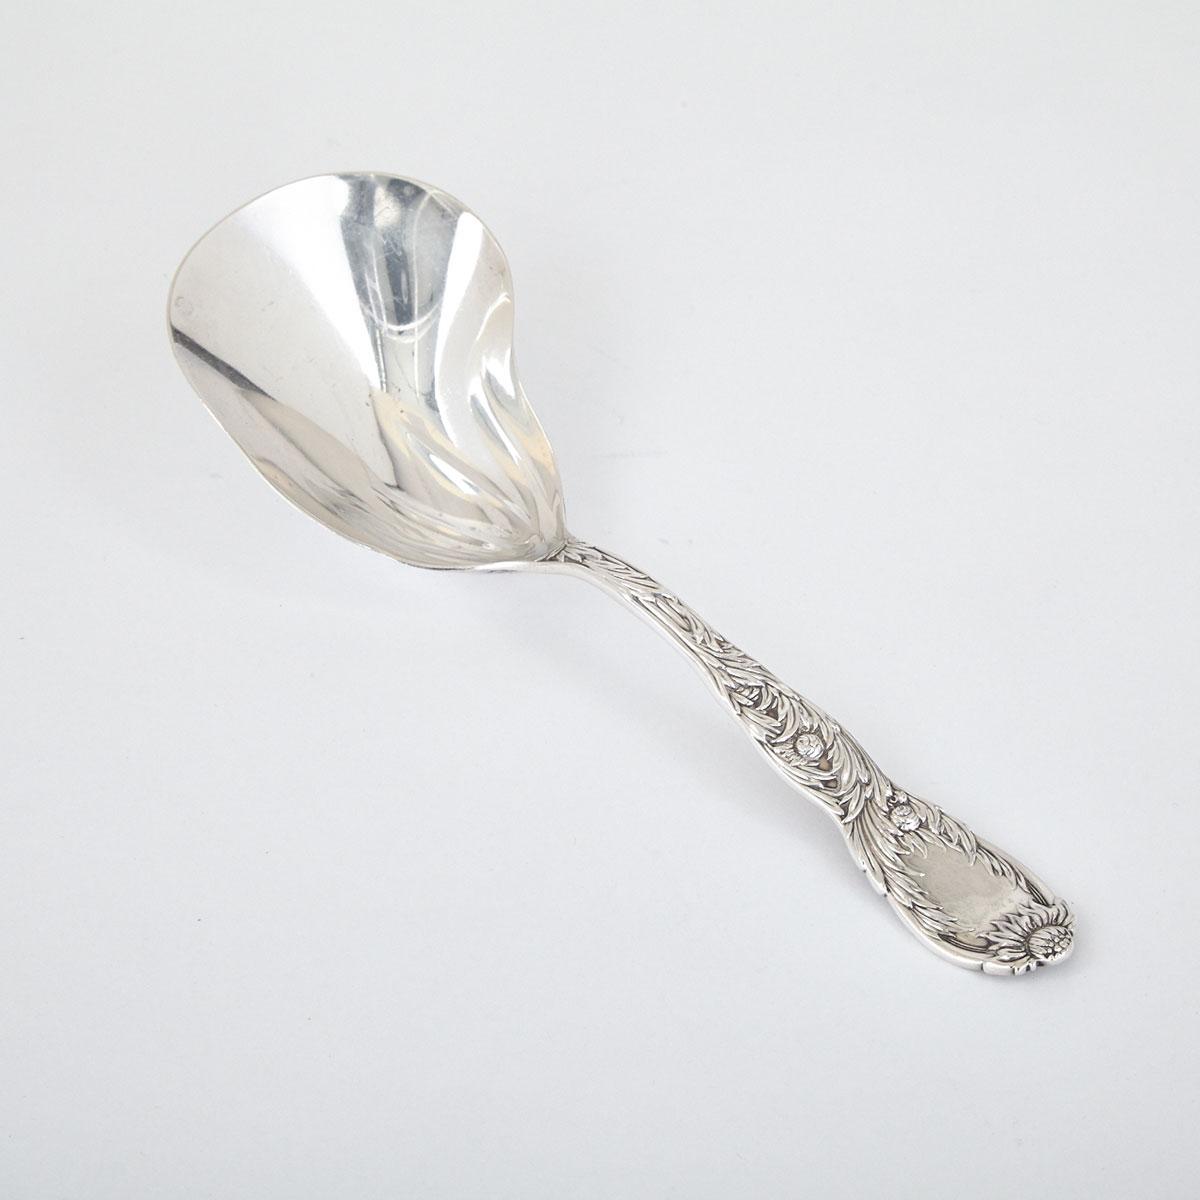 American Silver ‘Chrysanthemum’ Pattern Ice Cream Serving Spoon, Tiffany & Co., New York, N.Y., c.1900